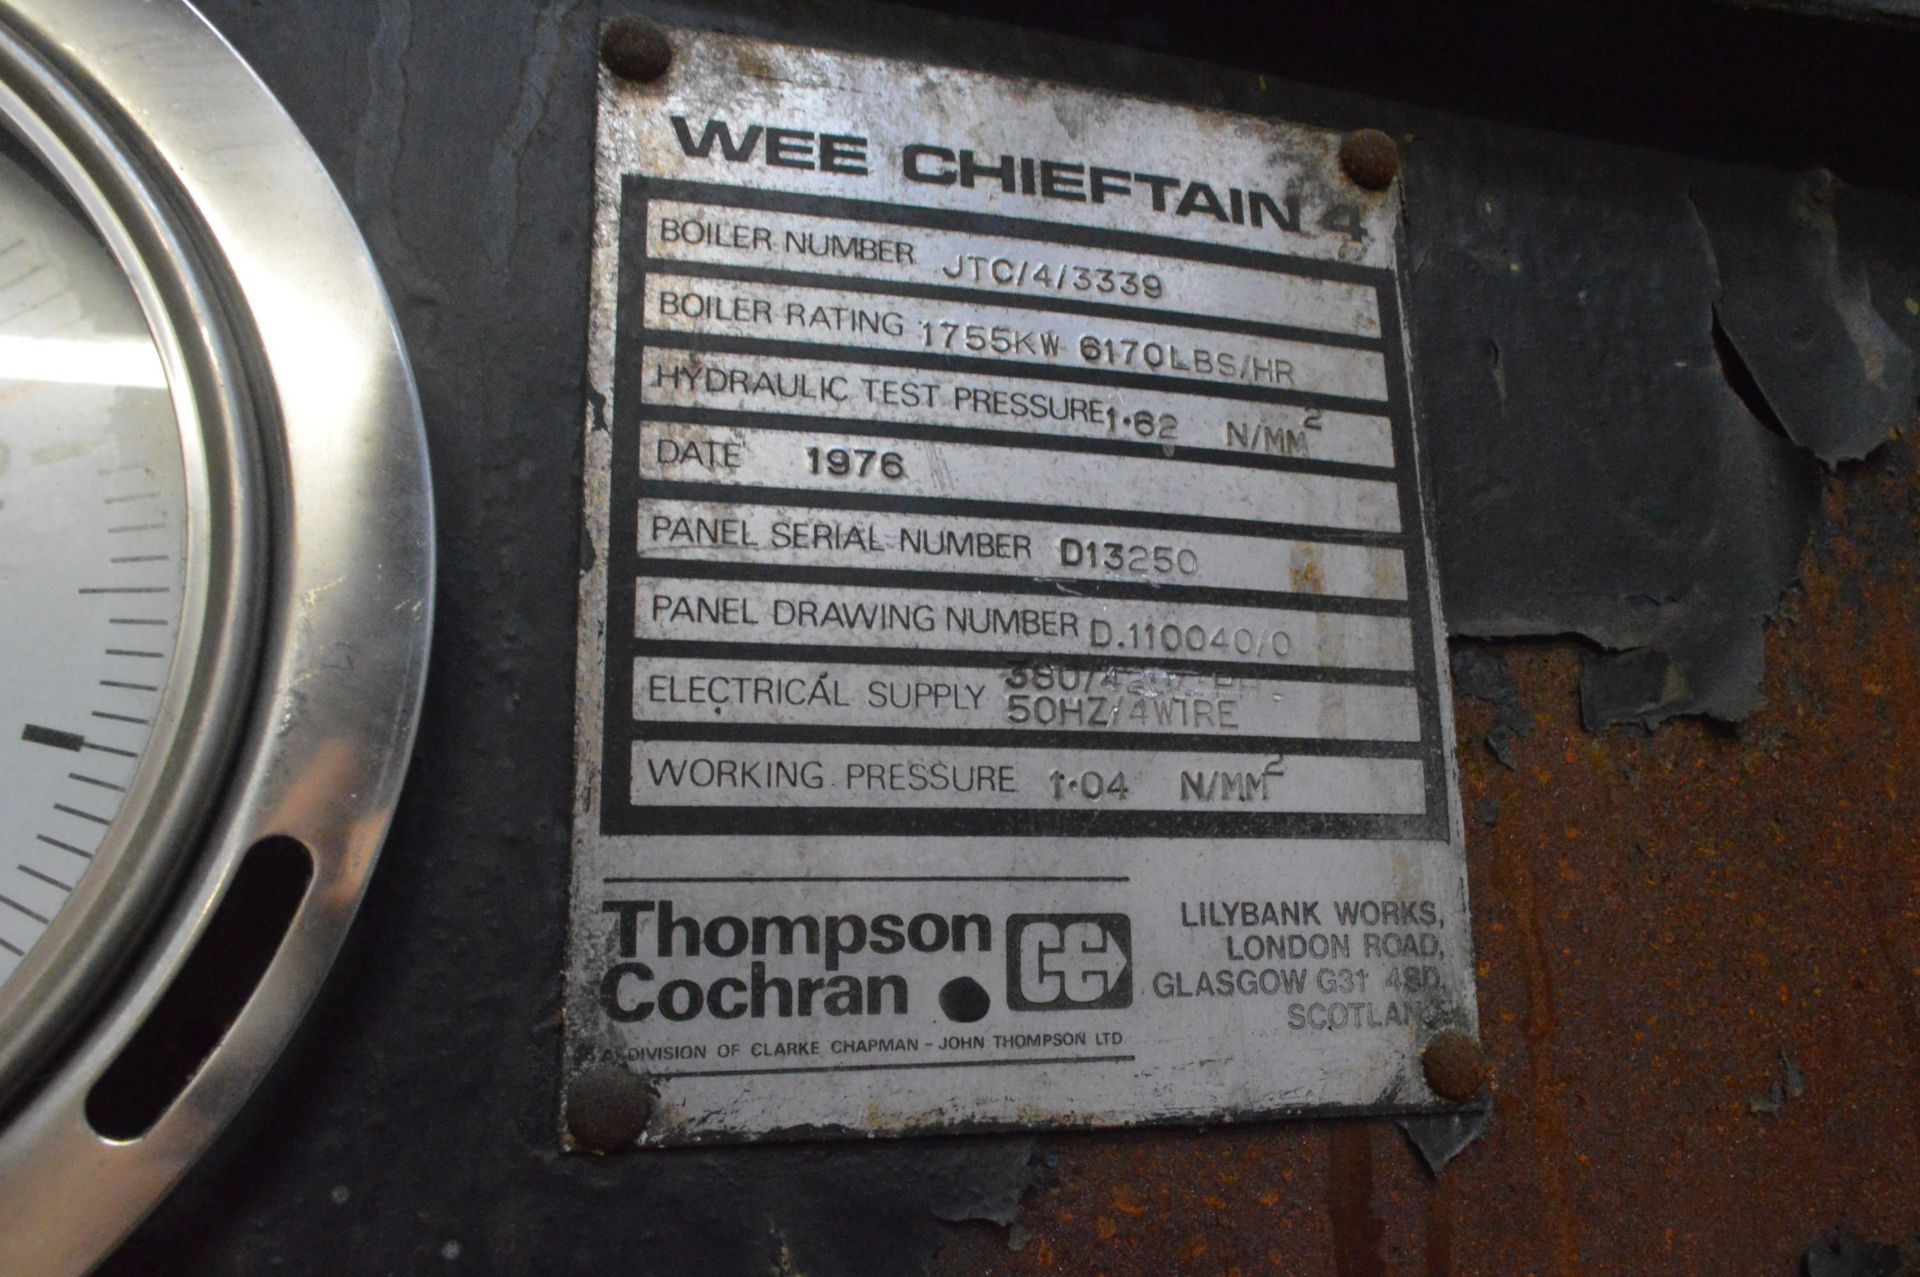 Thompson Cochran Wee Chieftain 4 6170 lbs/ hour Steam Boiler, serial no. JTC 4 3339, year of - Bild 3 aus 3